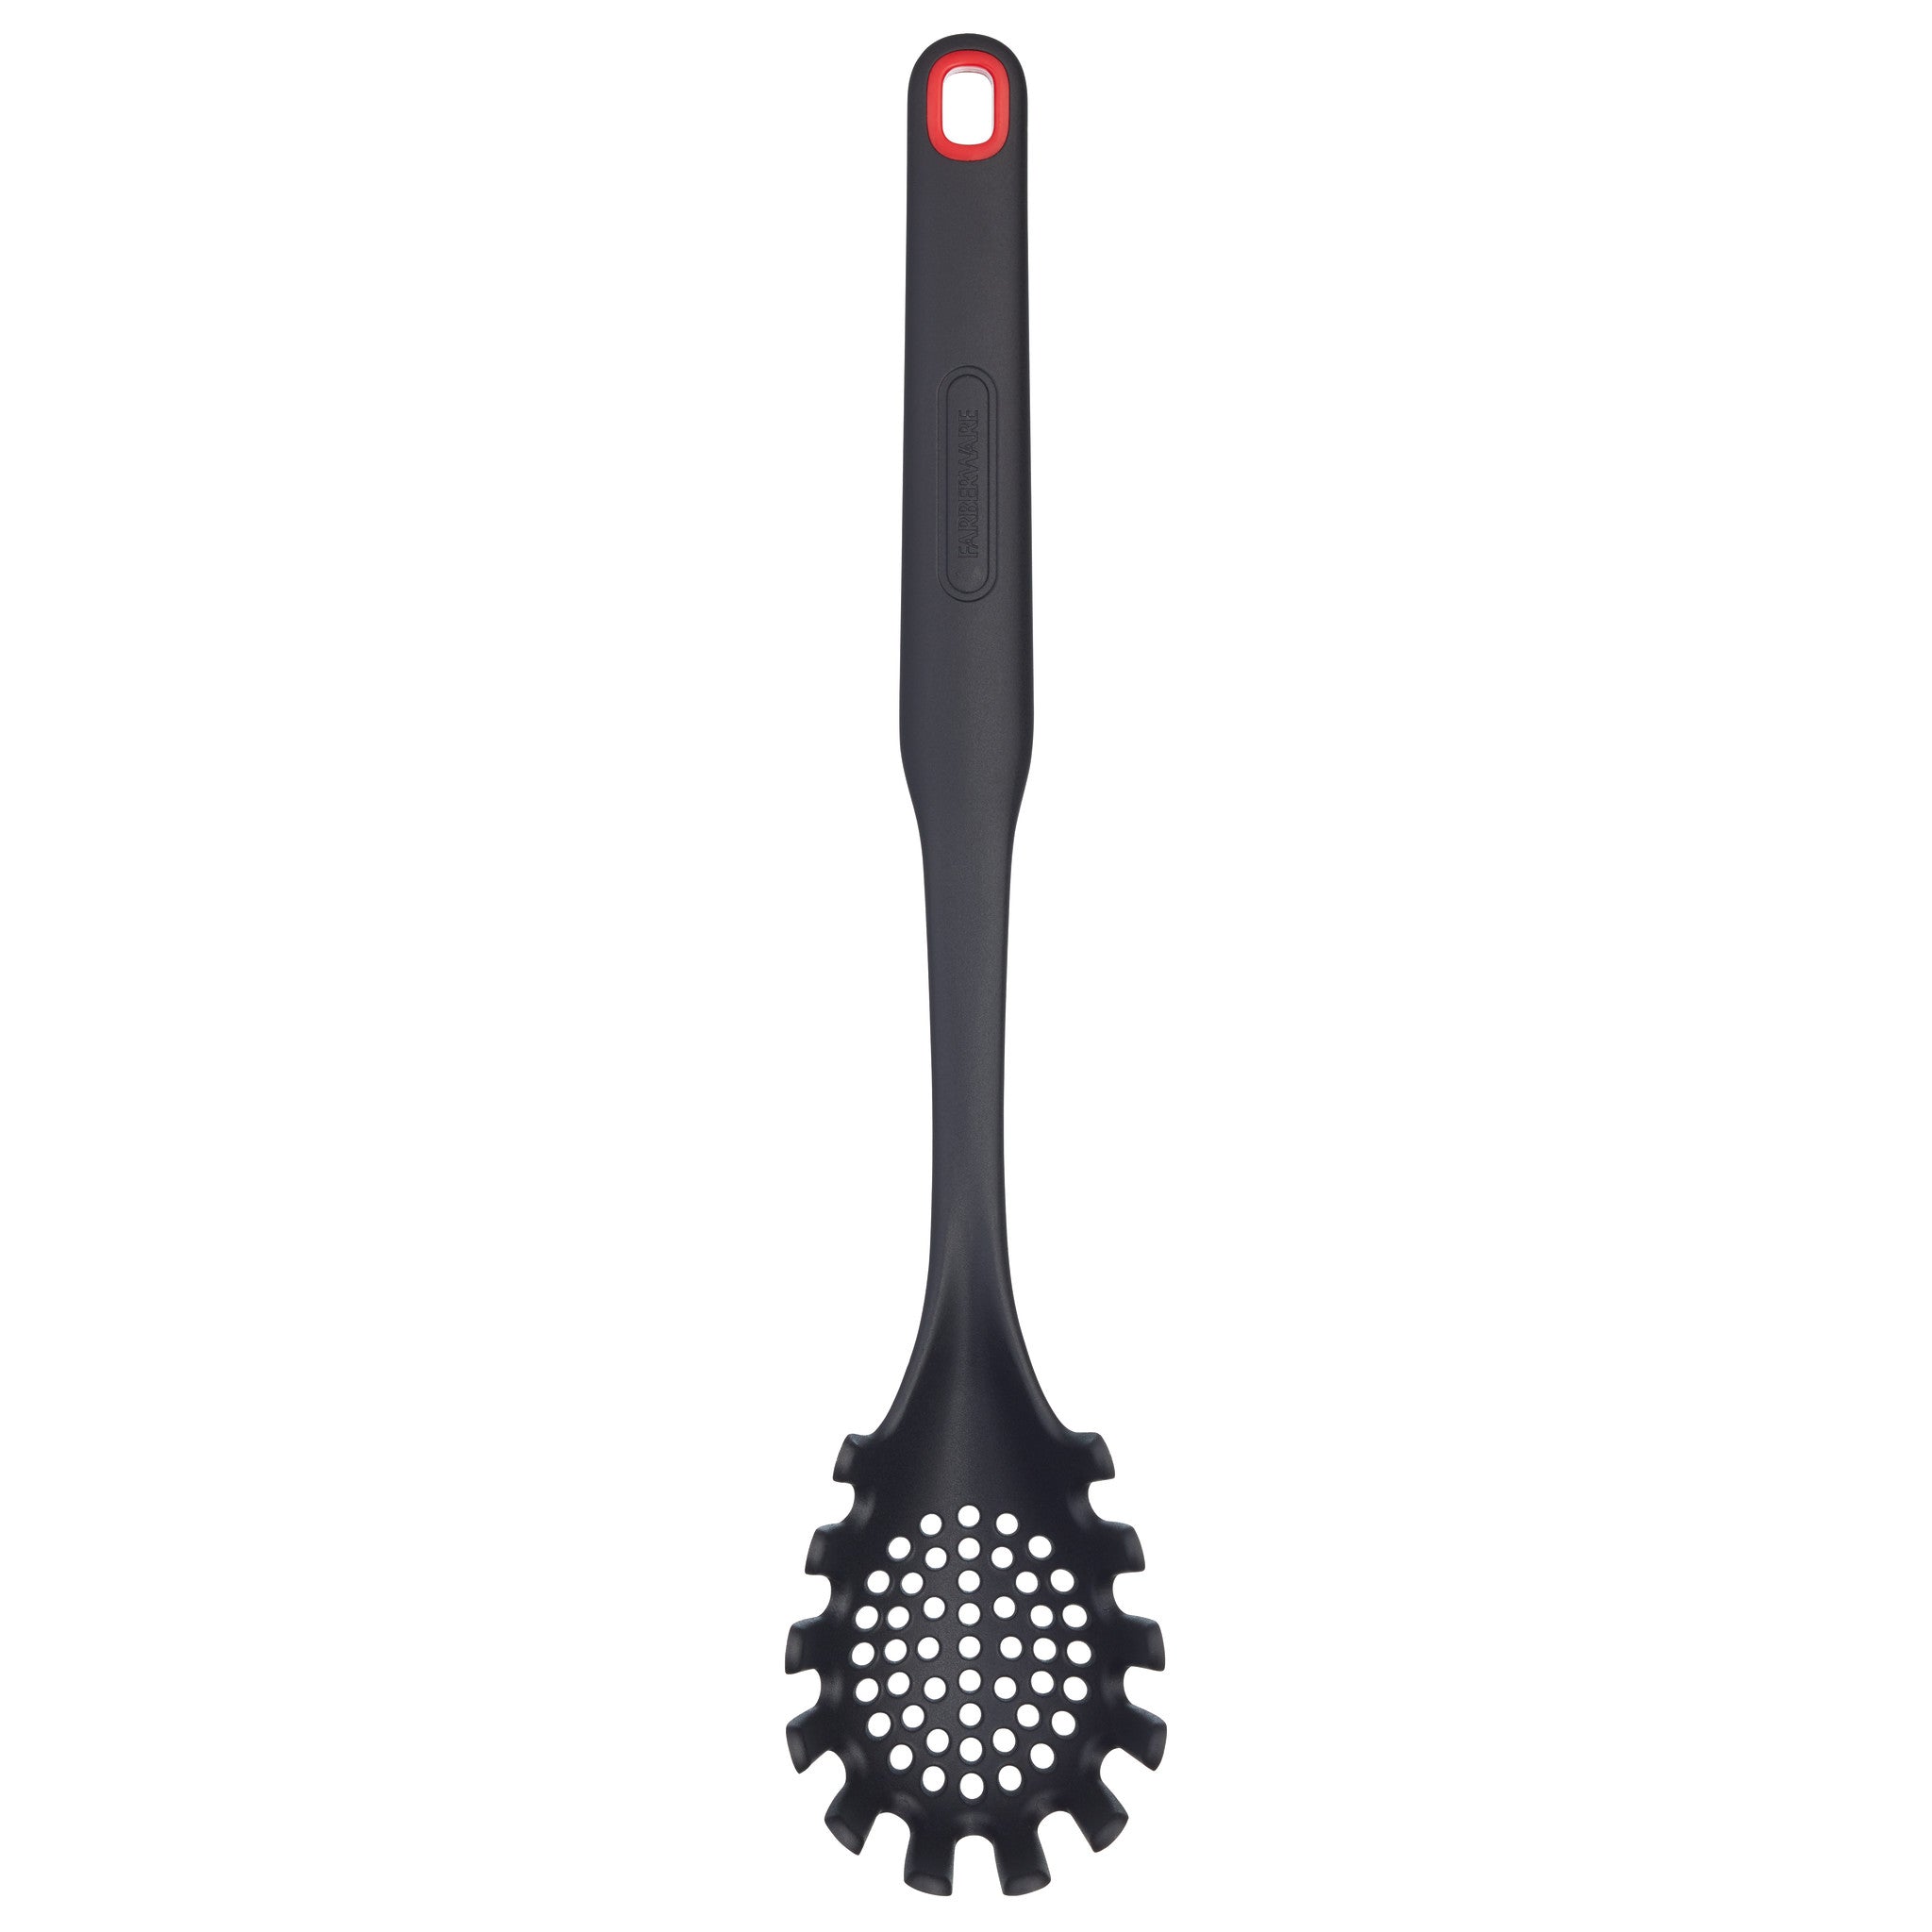 Farberware 13.5 In. Classic Black Nylon Basting Spoon - Bliffert